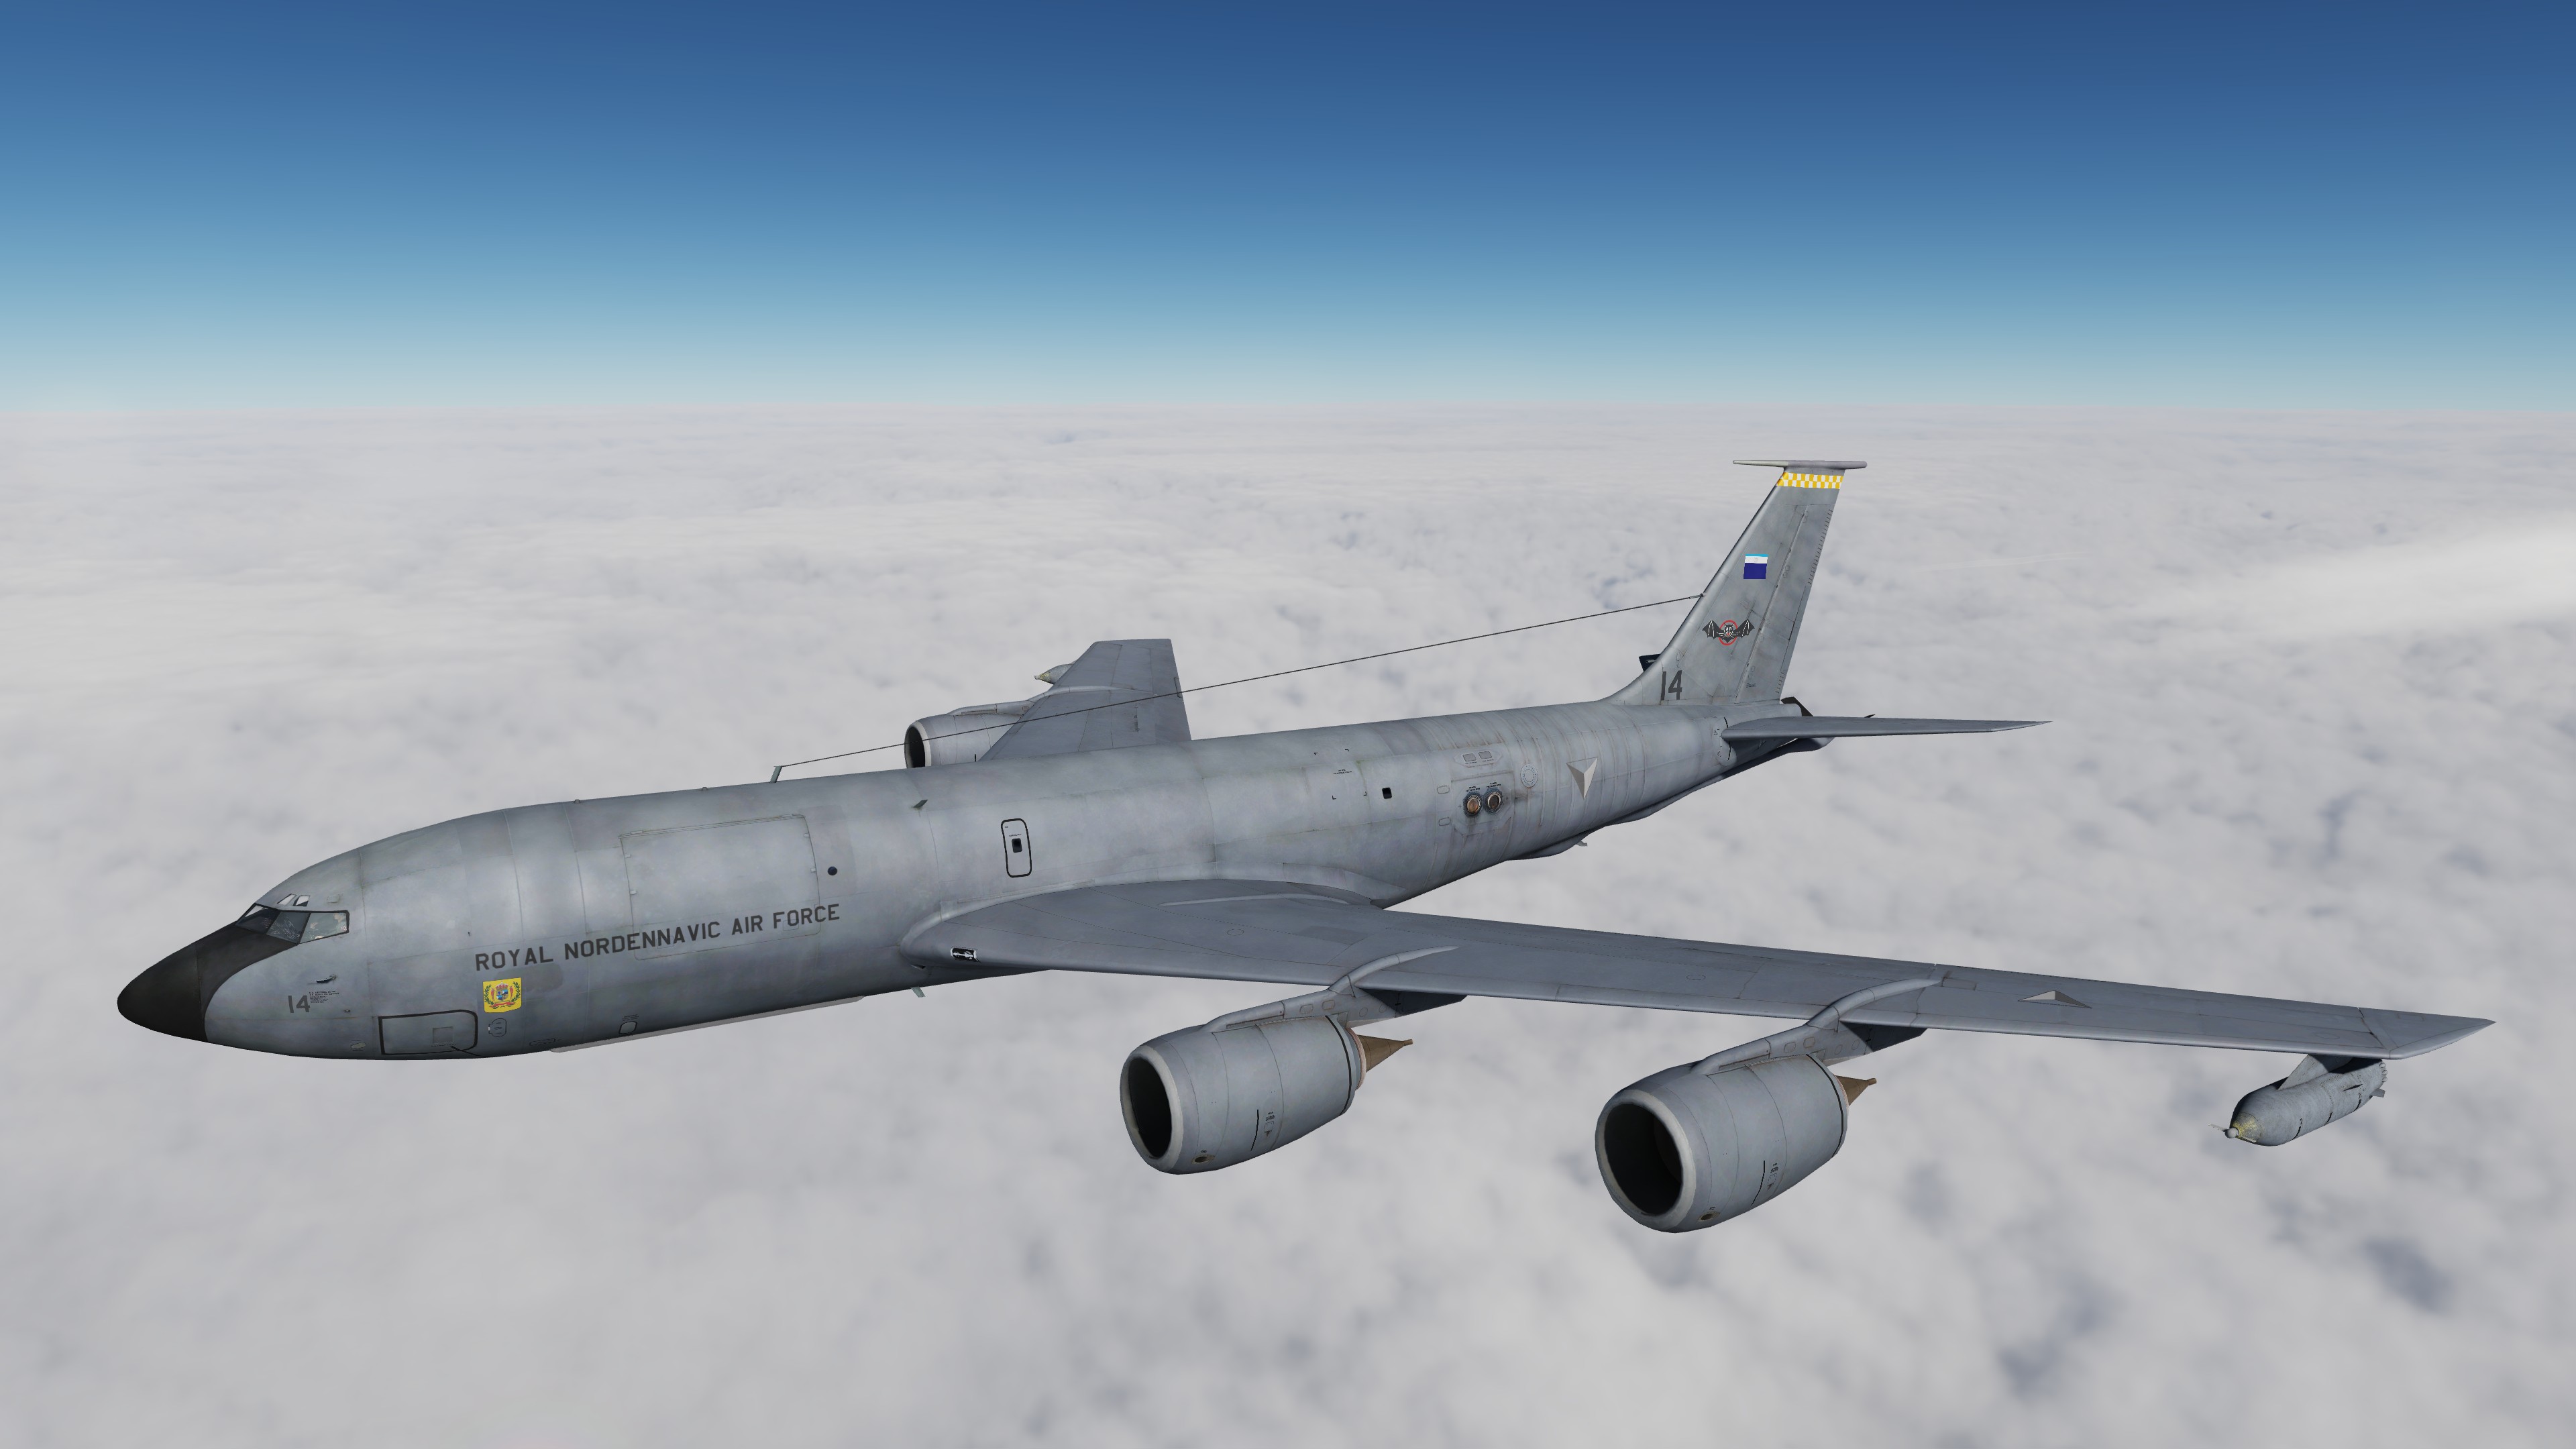 ACE COMBAT - KC-135 / KC-135MPRS - Nordennavic Royal Air Force - Sqn "Sologne" 2nd Flight LET 465 Part2